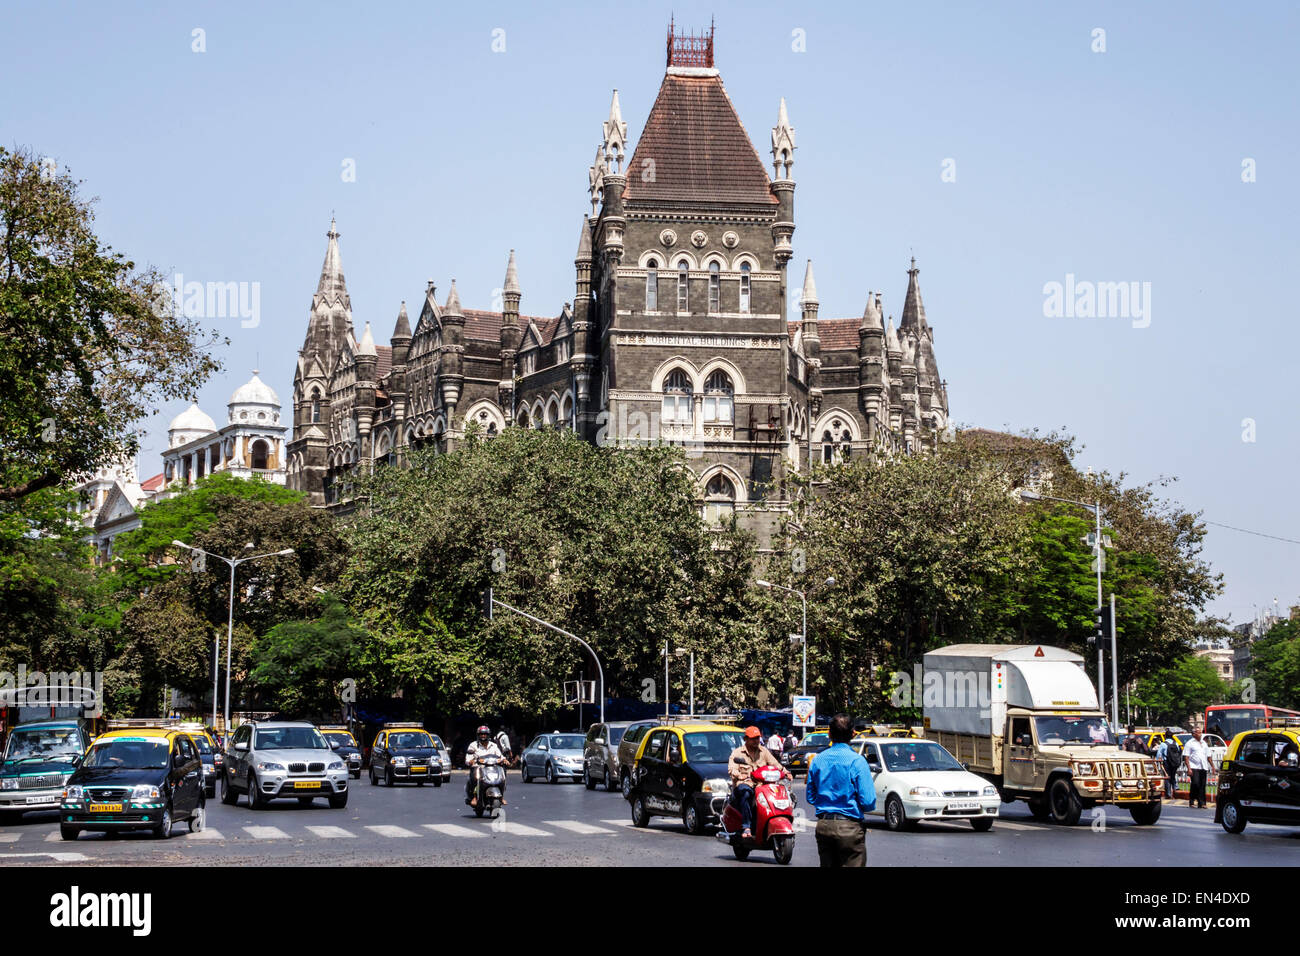 Mumbai India, Indian Asian, Fort Mumbai, Mahatma Gandhi Road, edifici orientali, traffico, automobili, automobili, visitatori viaggio turismo turistico viaggio l Foto Stock